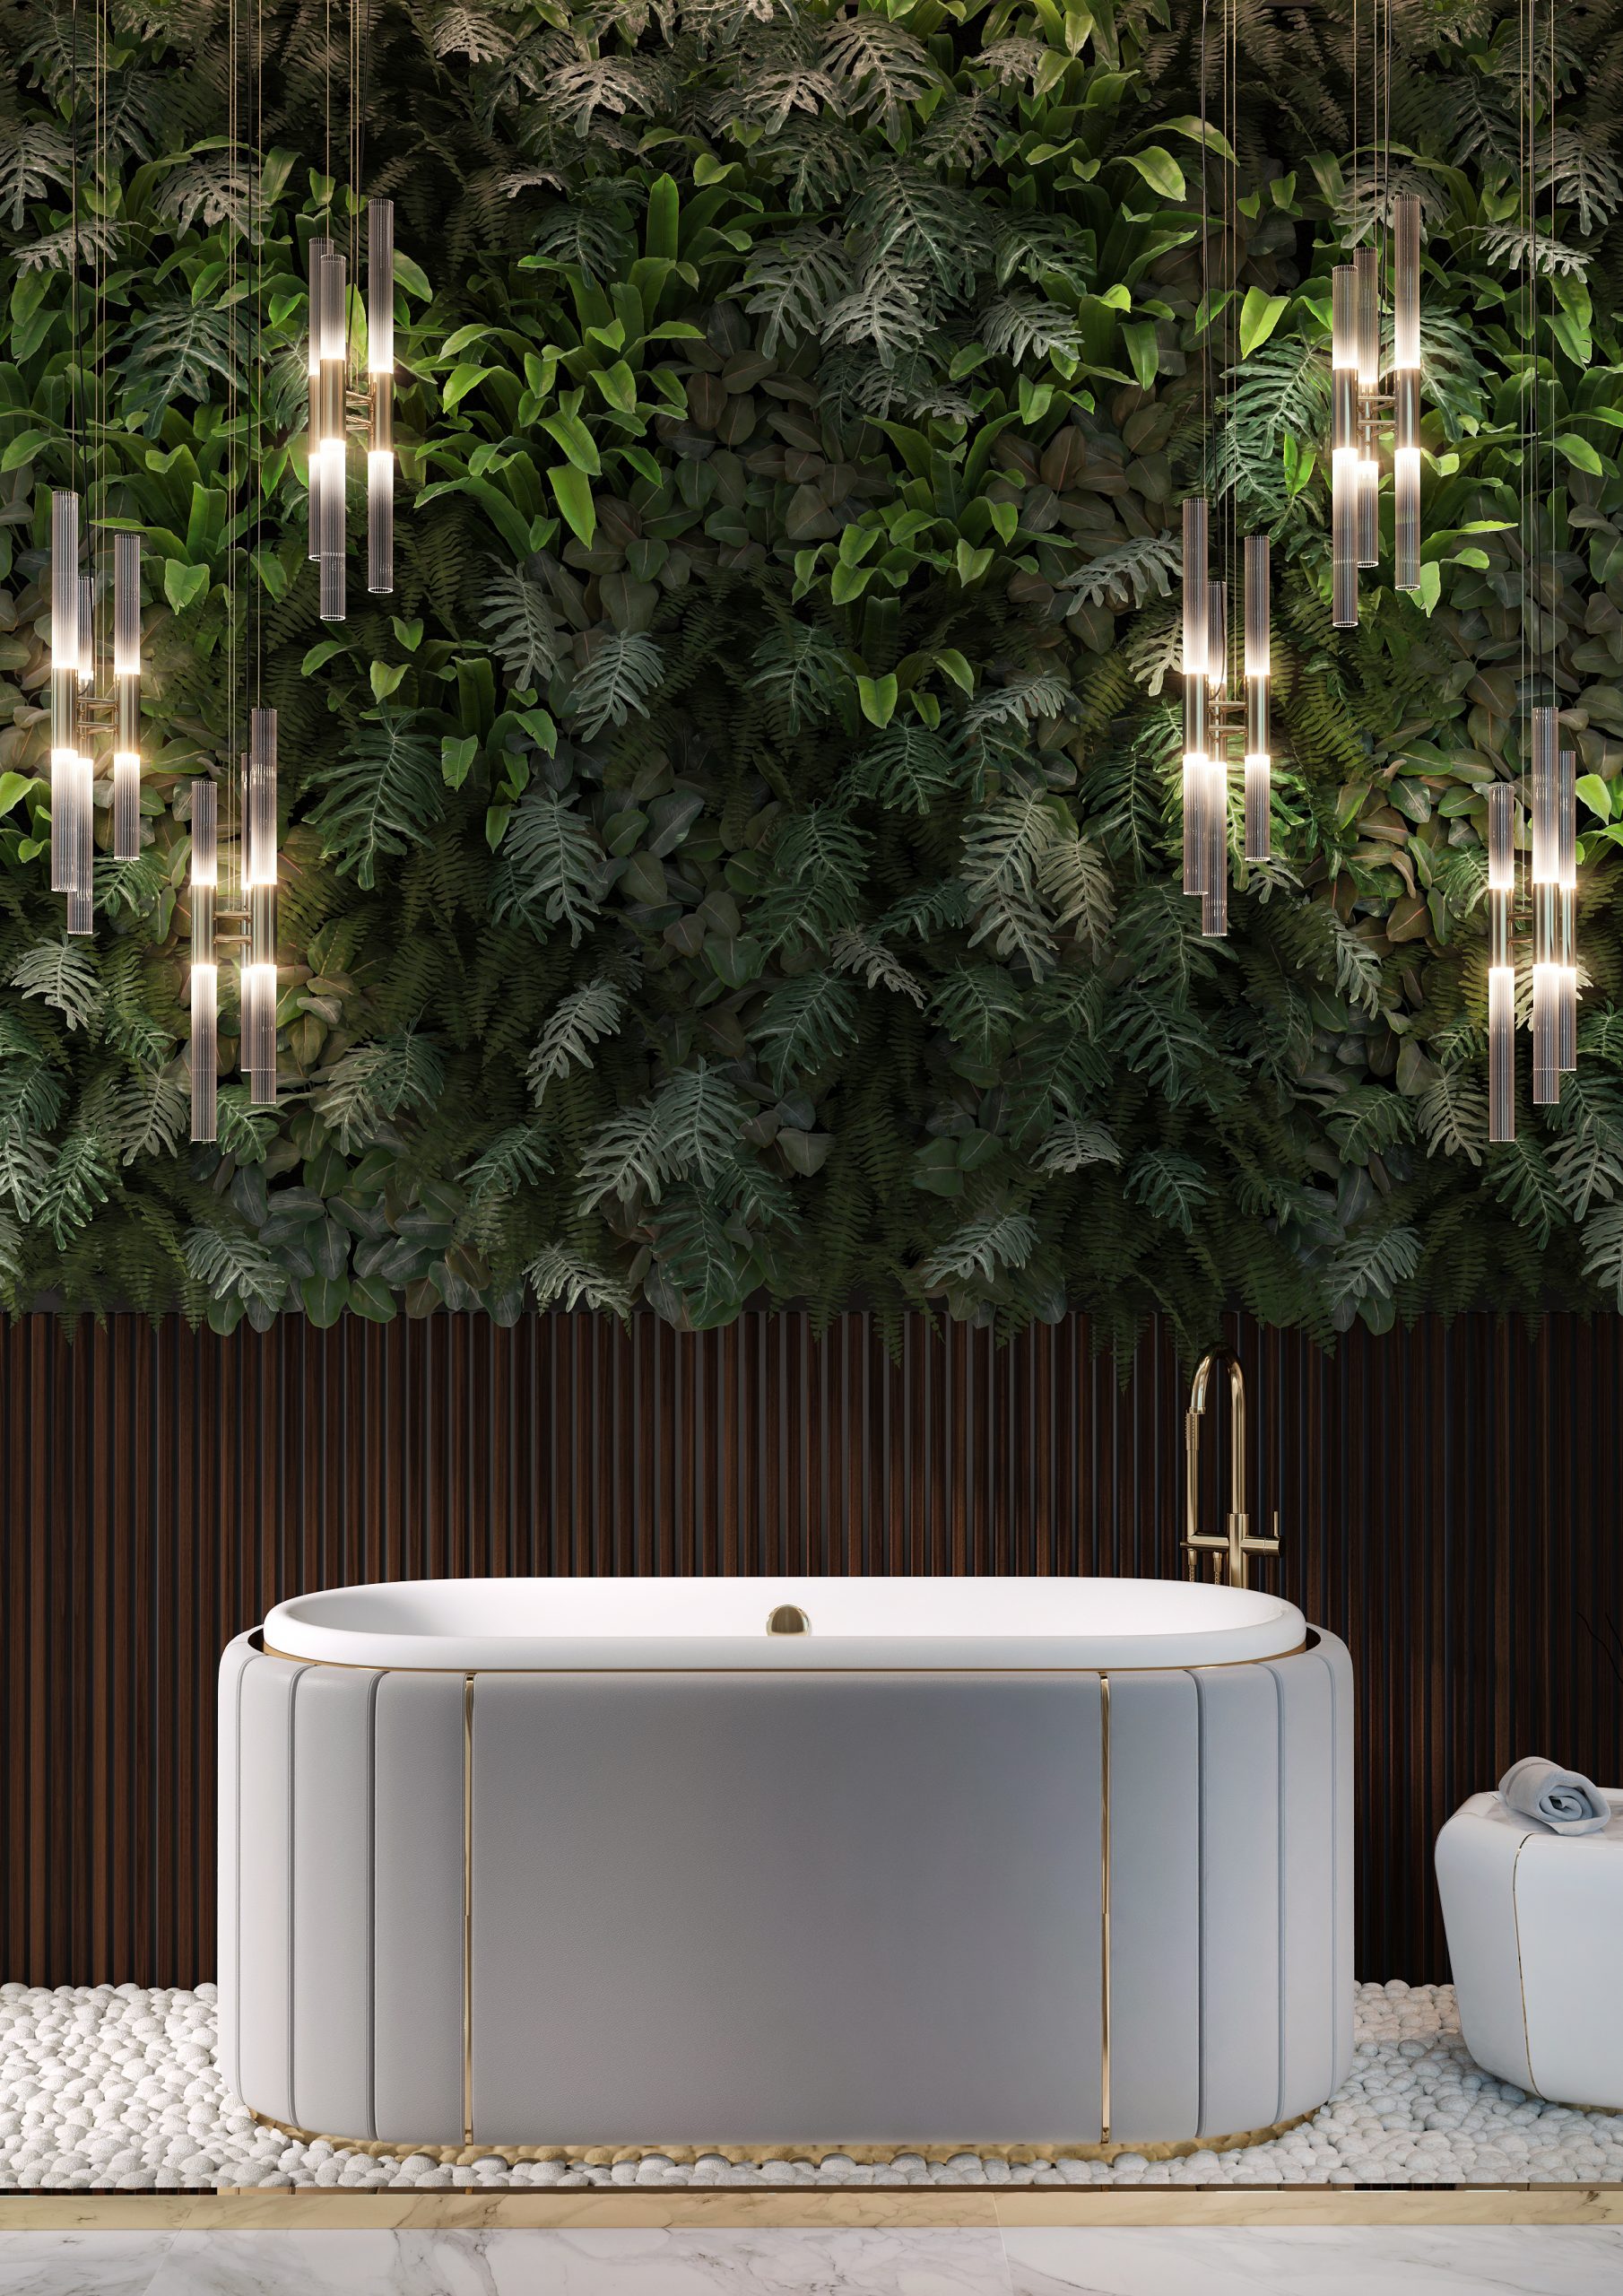 A Modern Bathroom Of Your Dreams